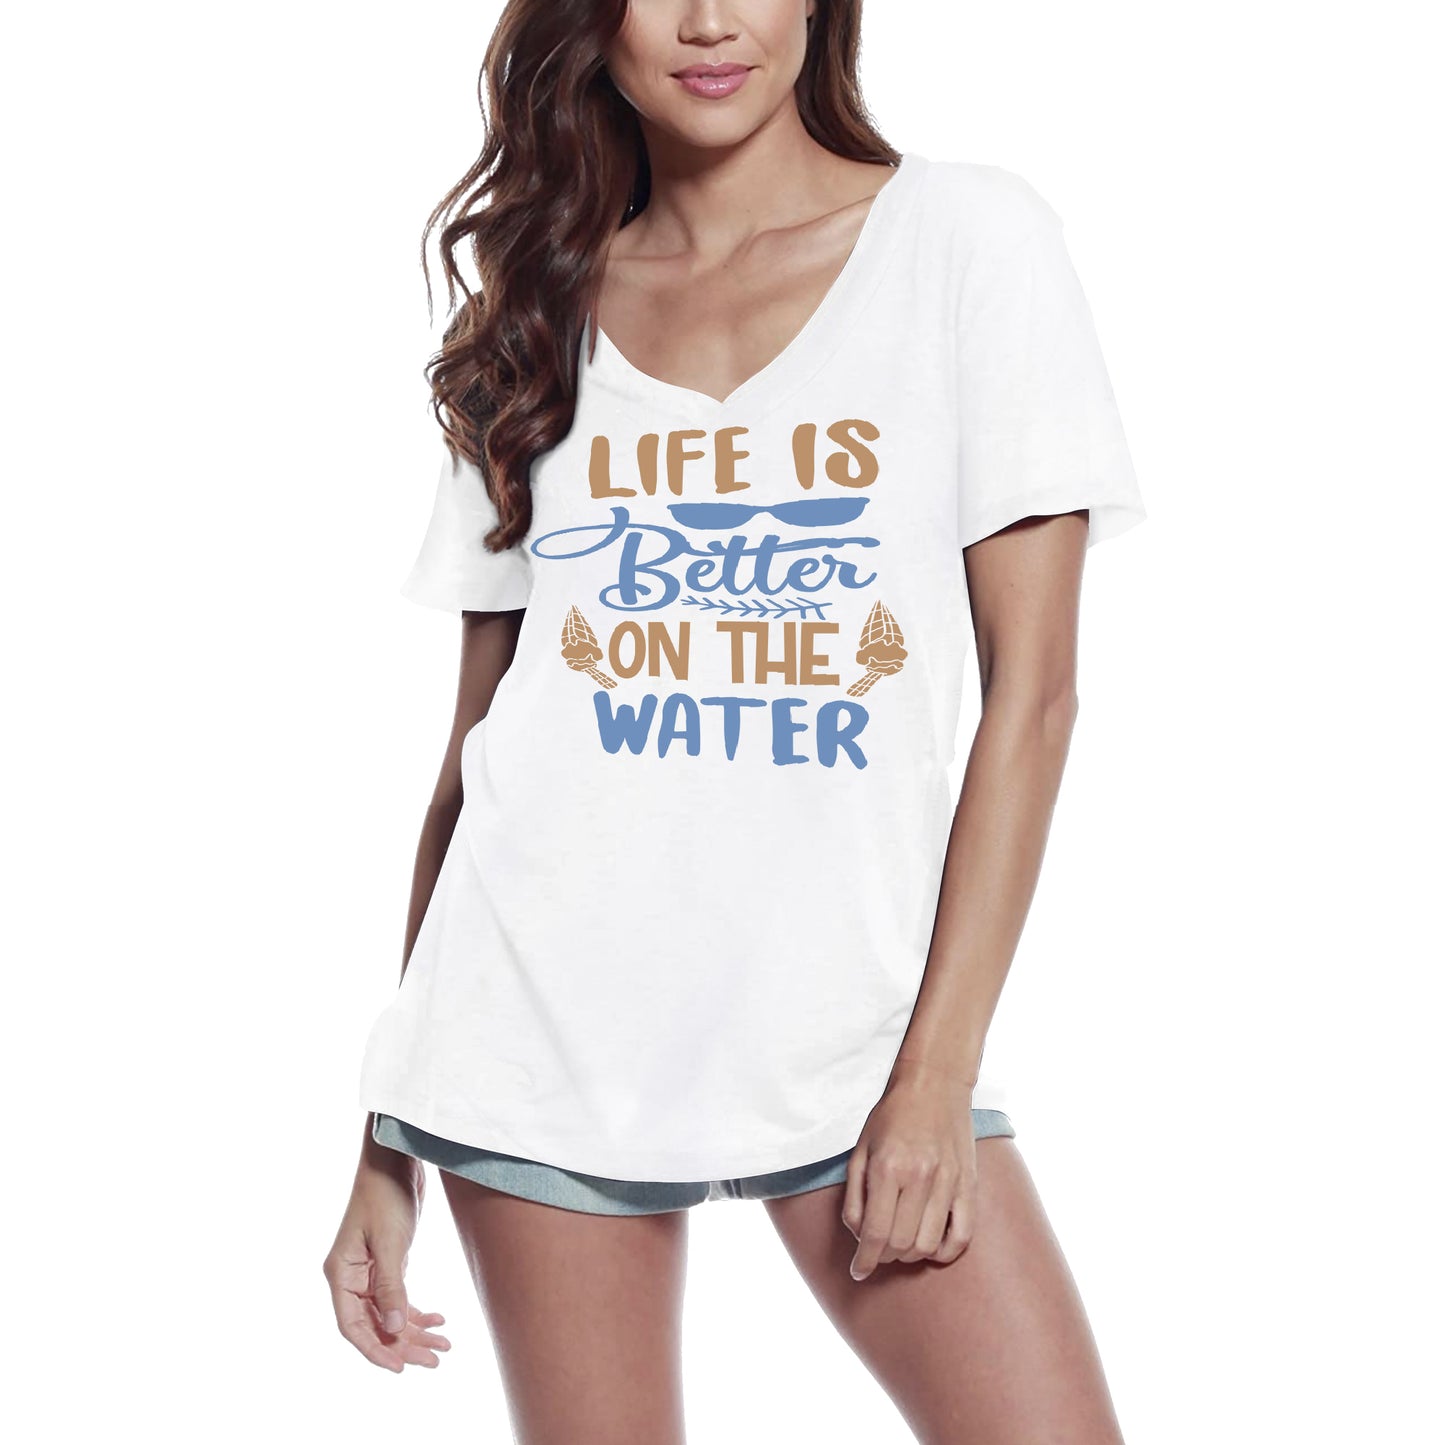 ULTRABASIC Women's T-Shirt Life is Better on the Water - Short Sleeve Tee Shirt Tops